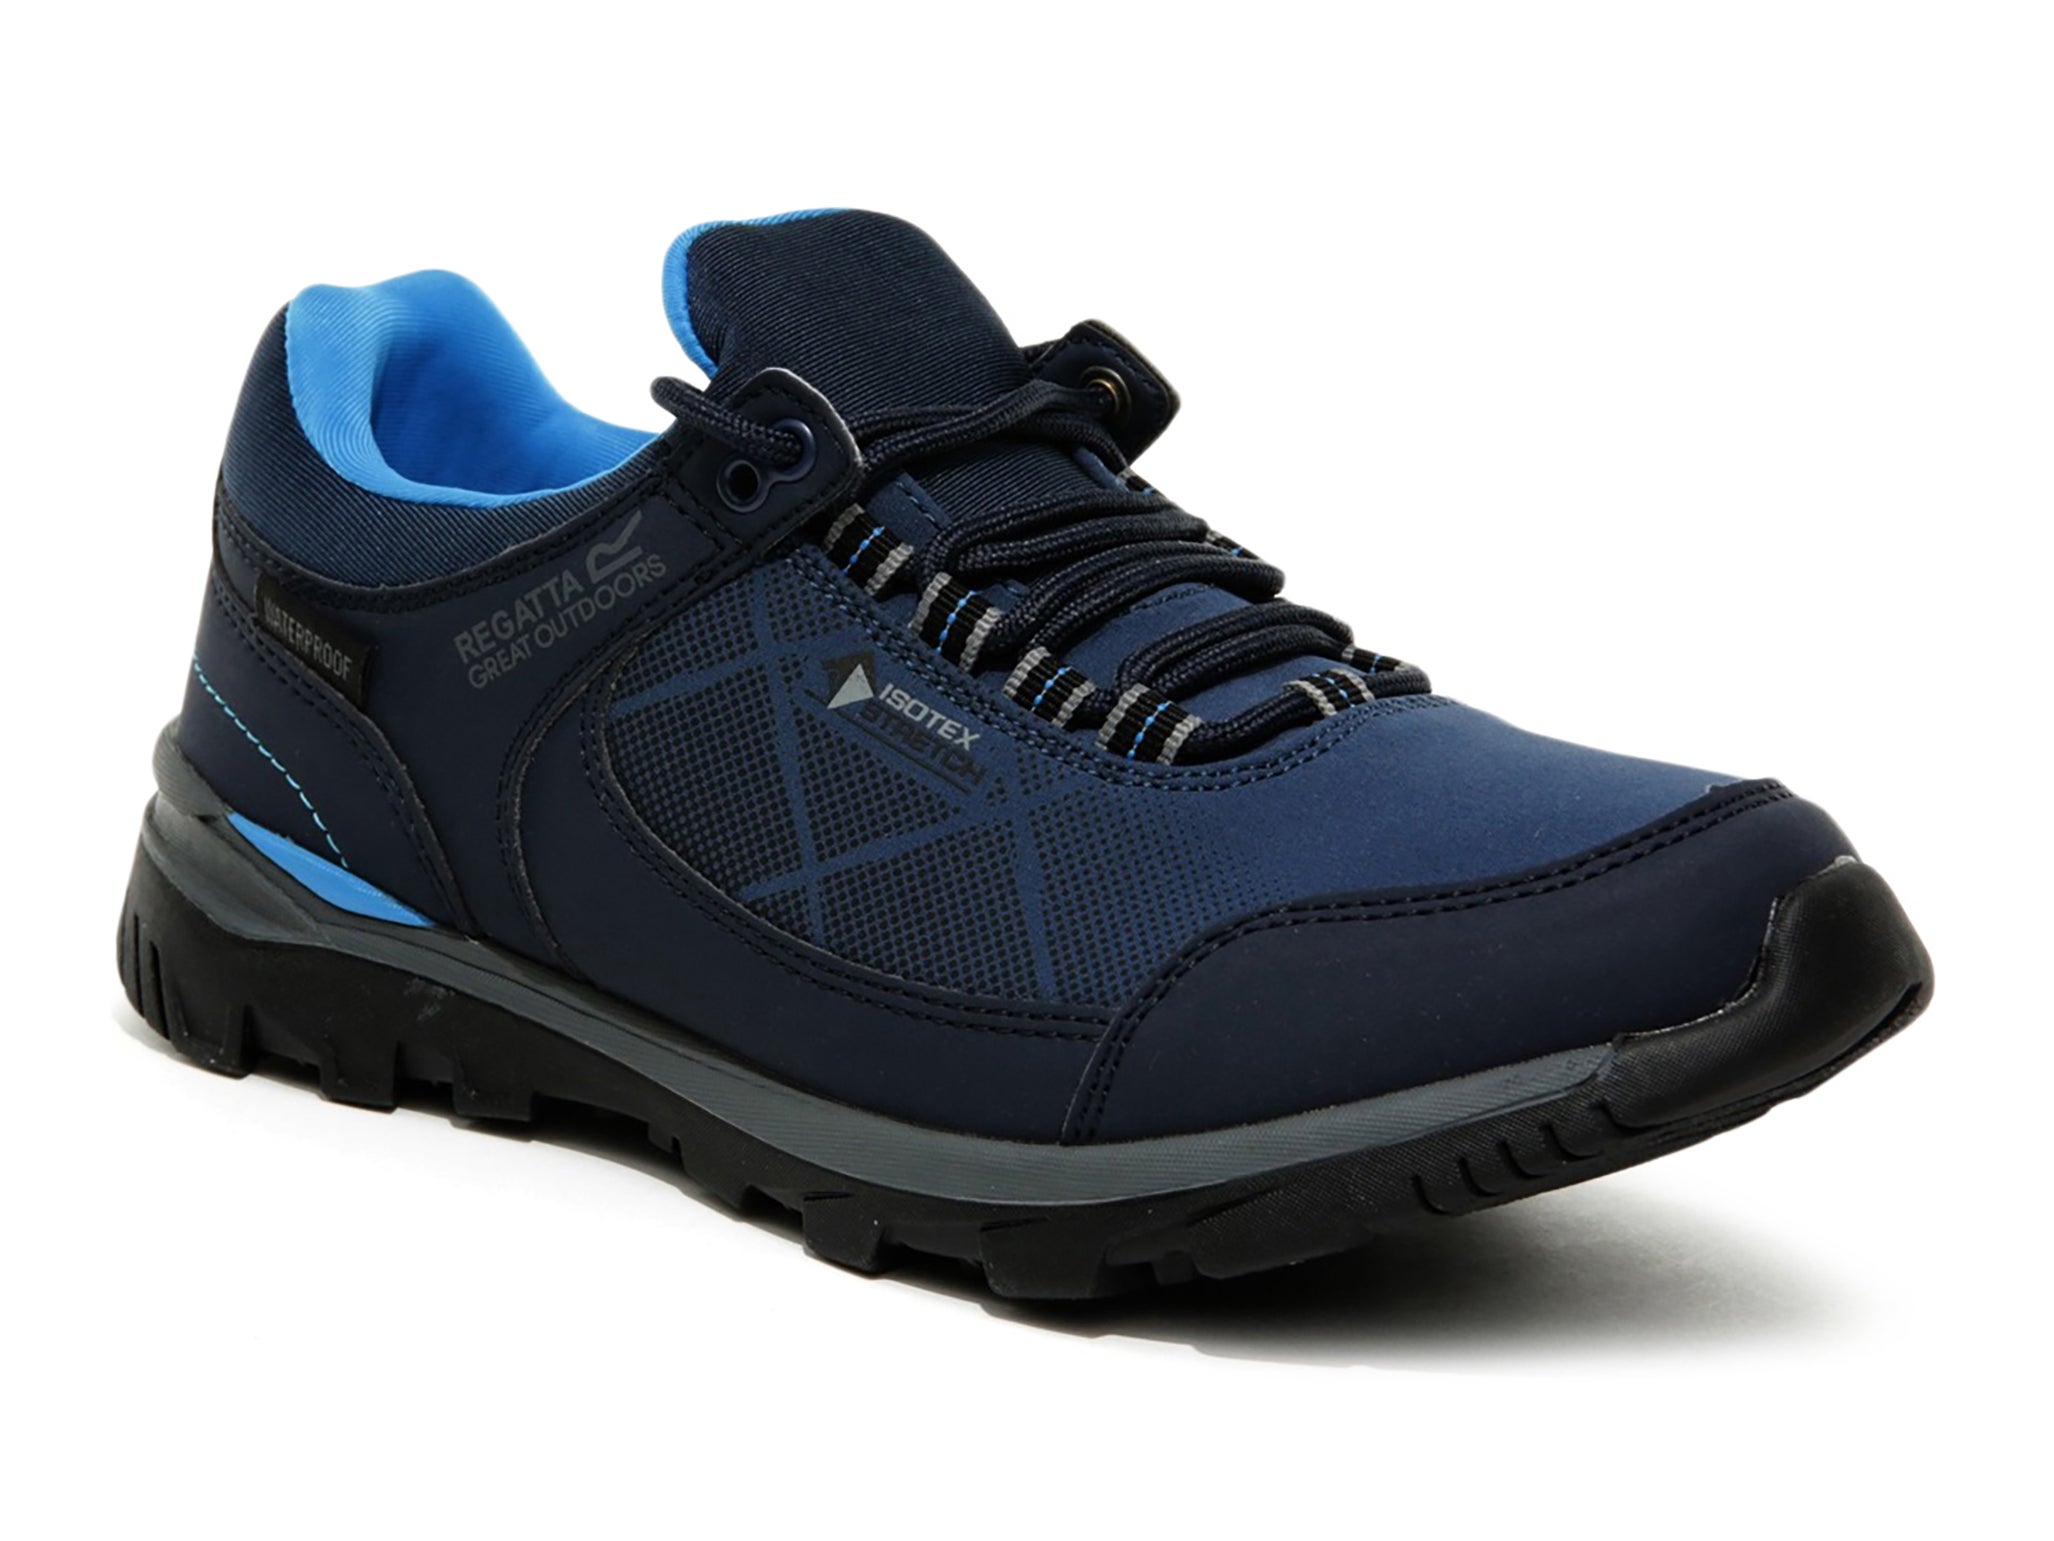 Regatta Ladies Trainers Womens Waterproof Breathable Walking Shoes New Size 3 